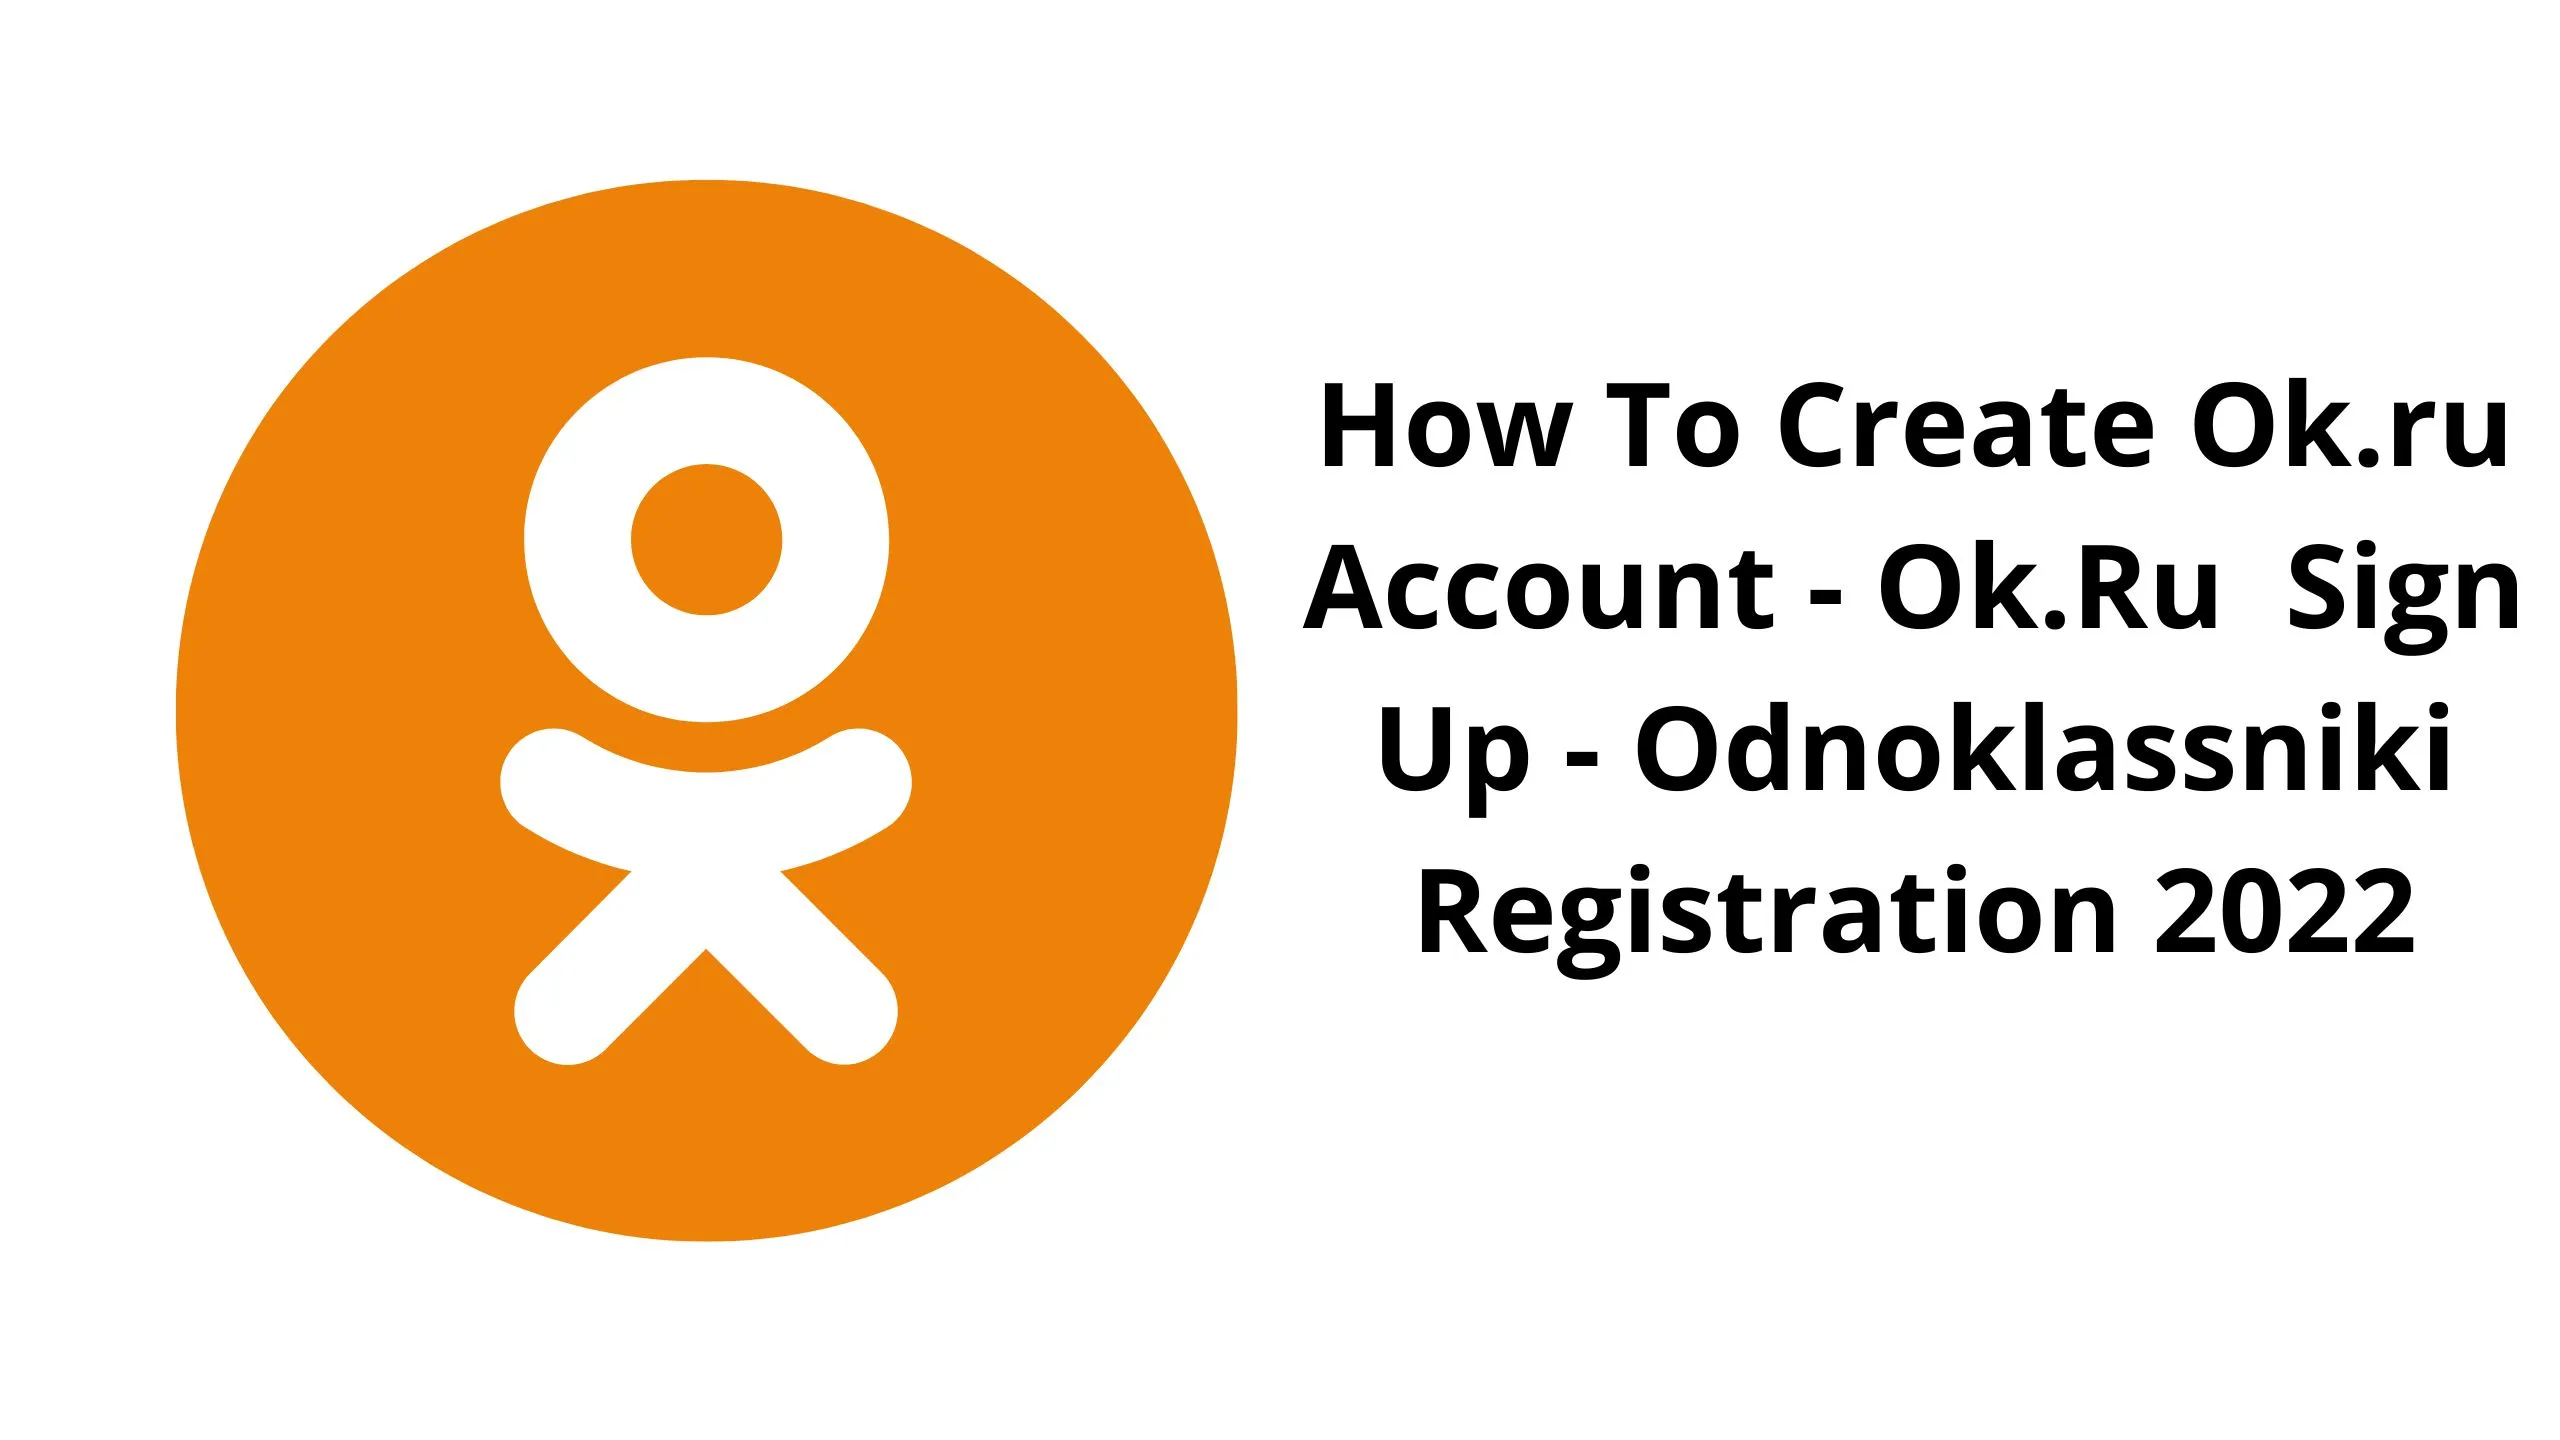 How To Create Ok.ru Account - Ok.Ru Sign Up - Odnoklassniki Registration 2022 2 » Tech And Scholarship Updates